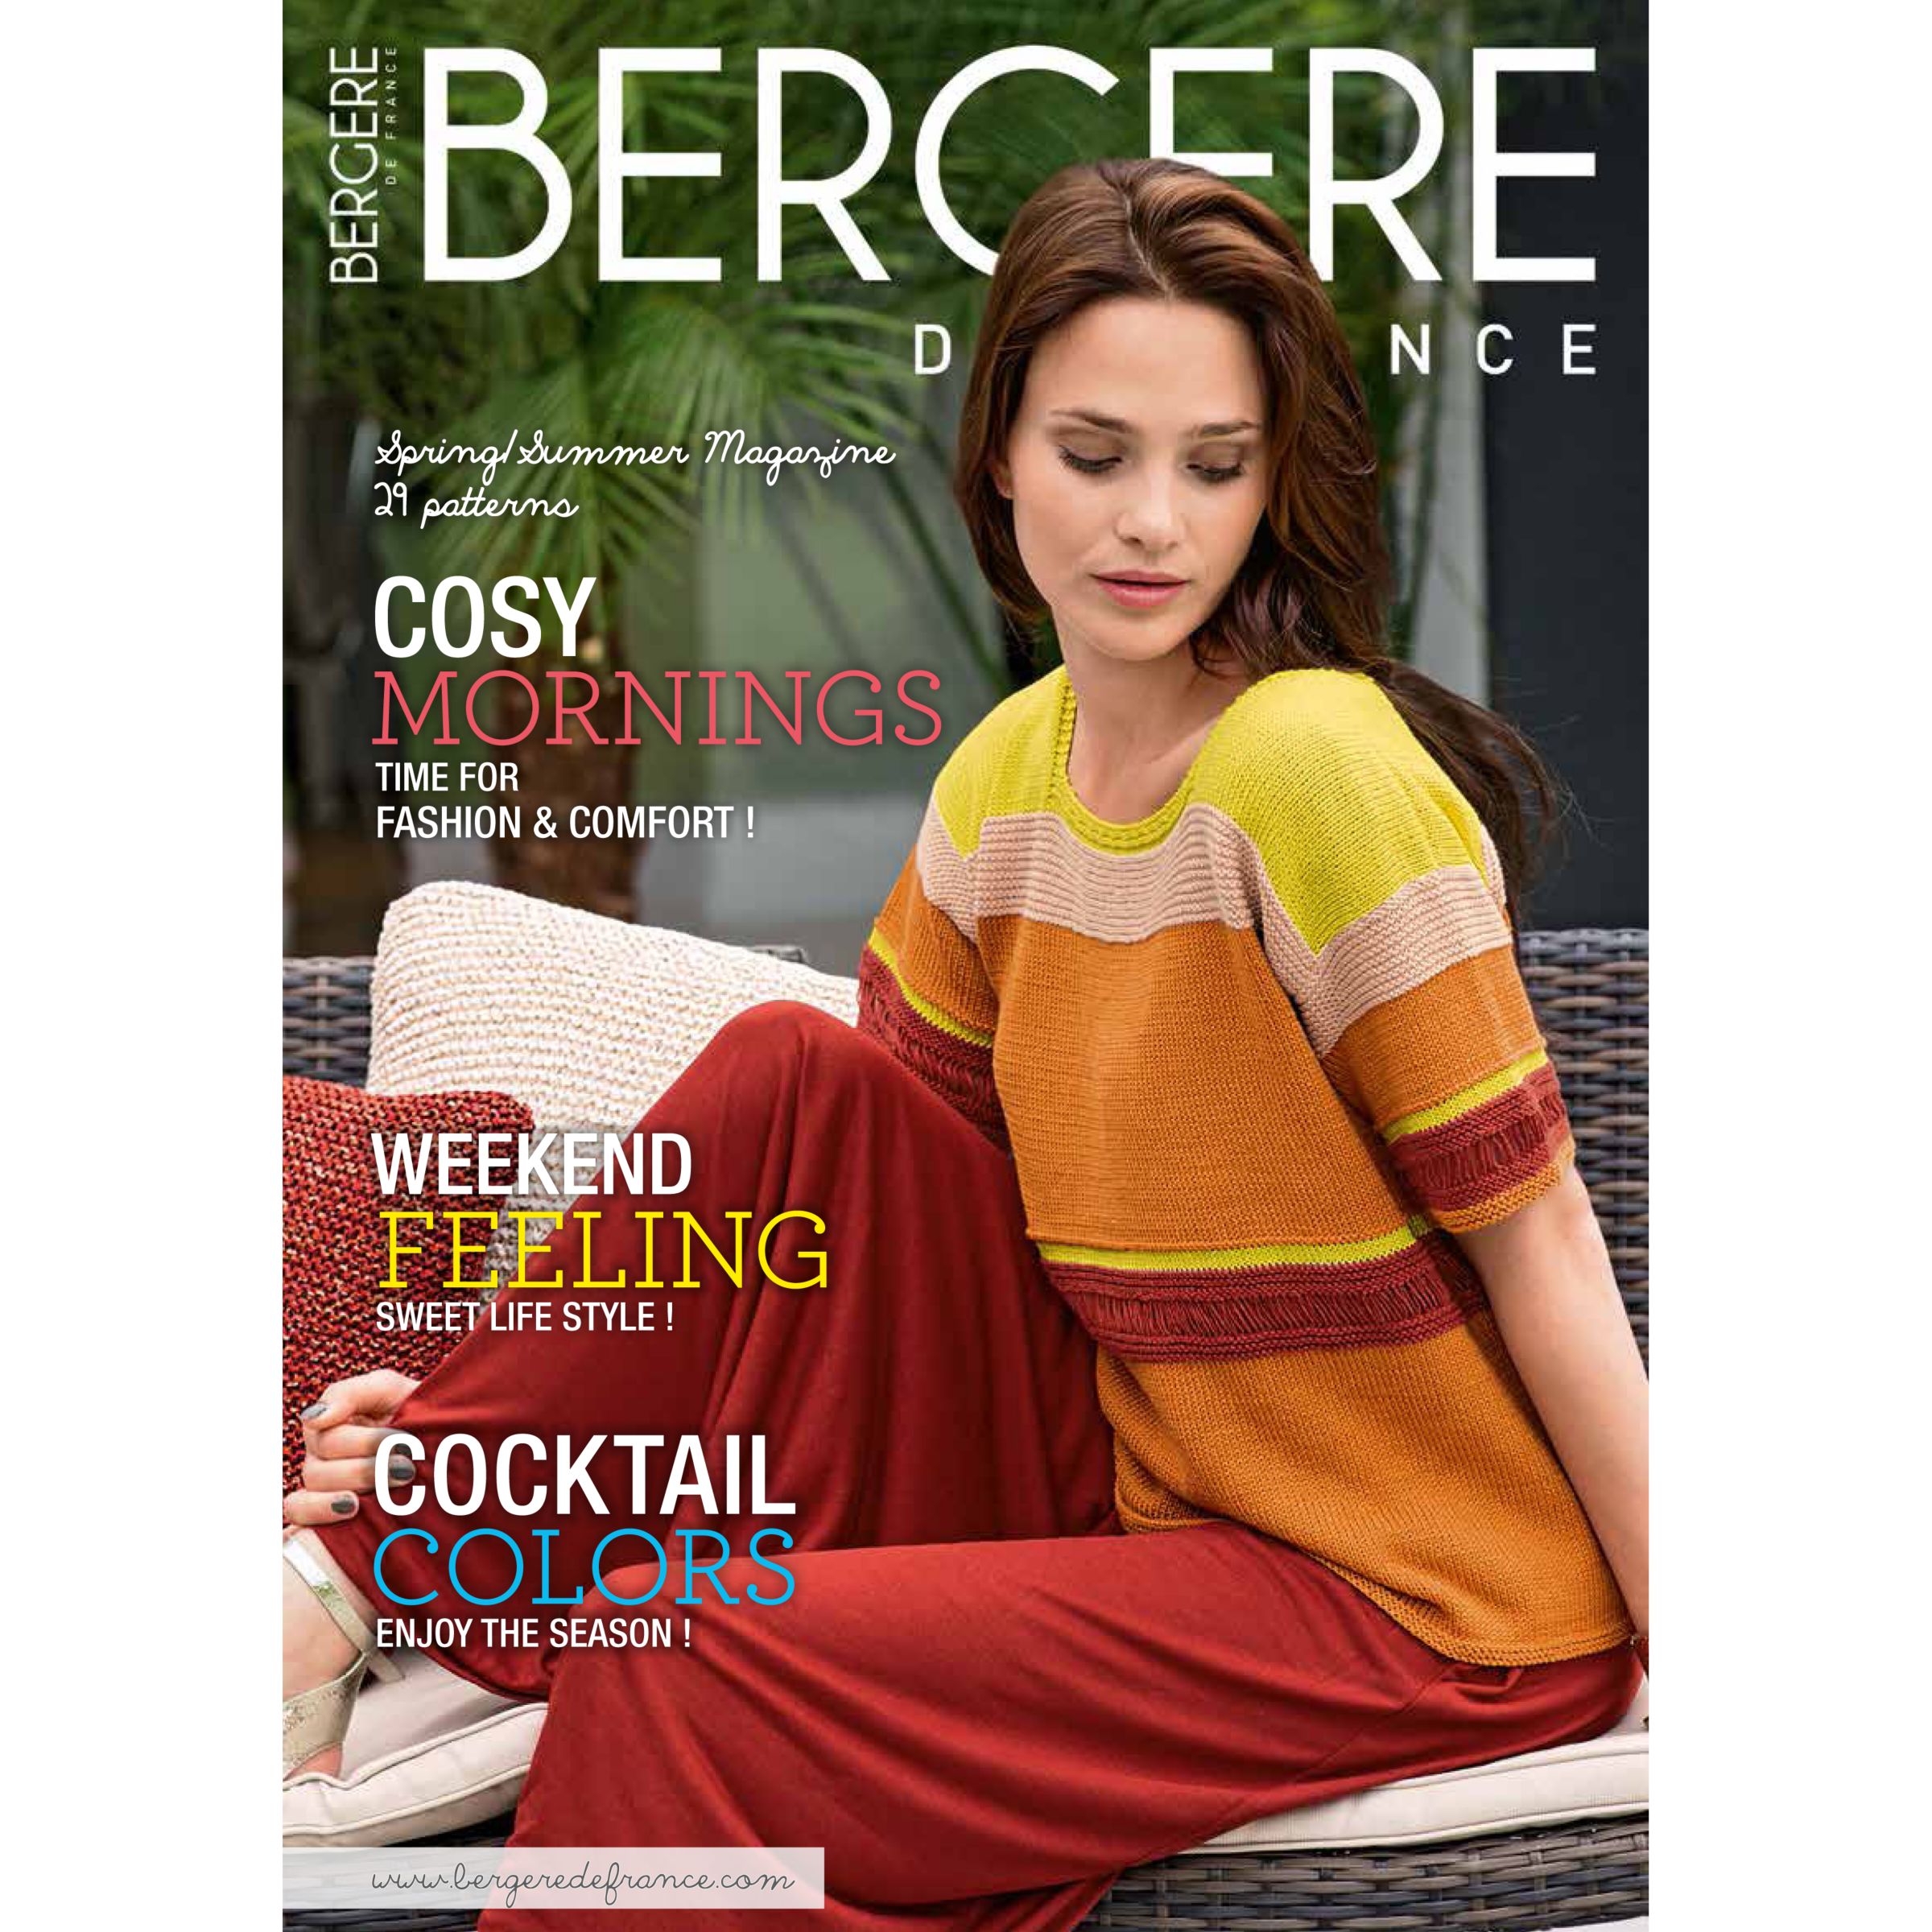 Bergere De France Knitting Pattern Spring Summer Magazine